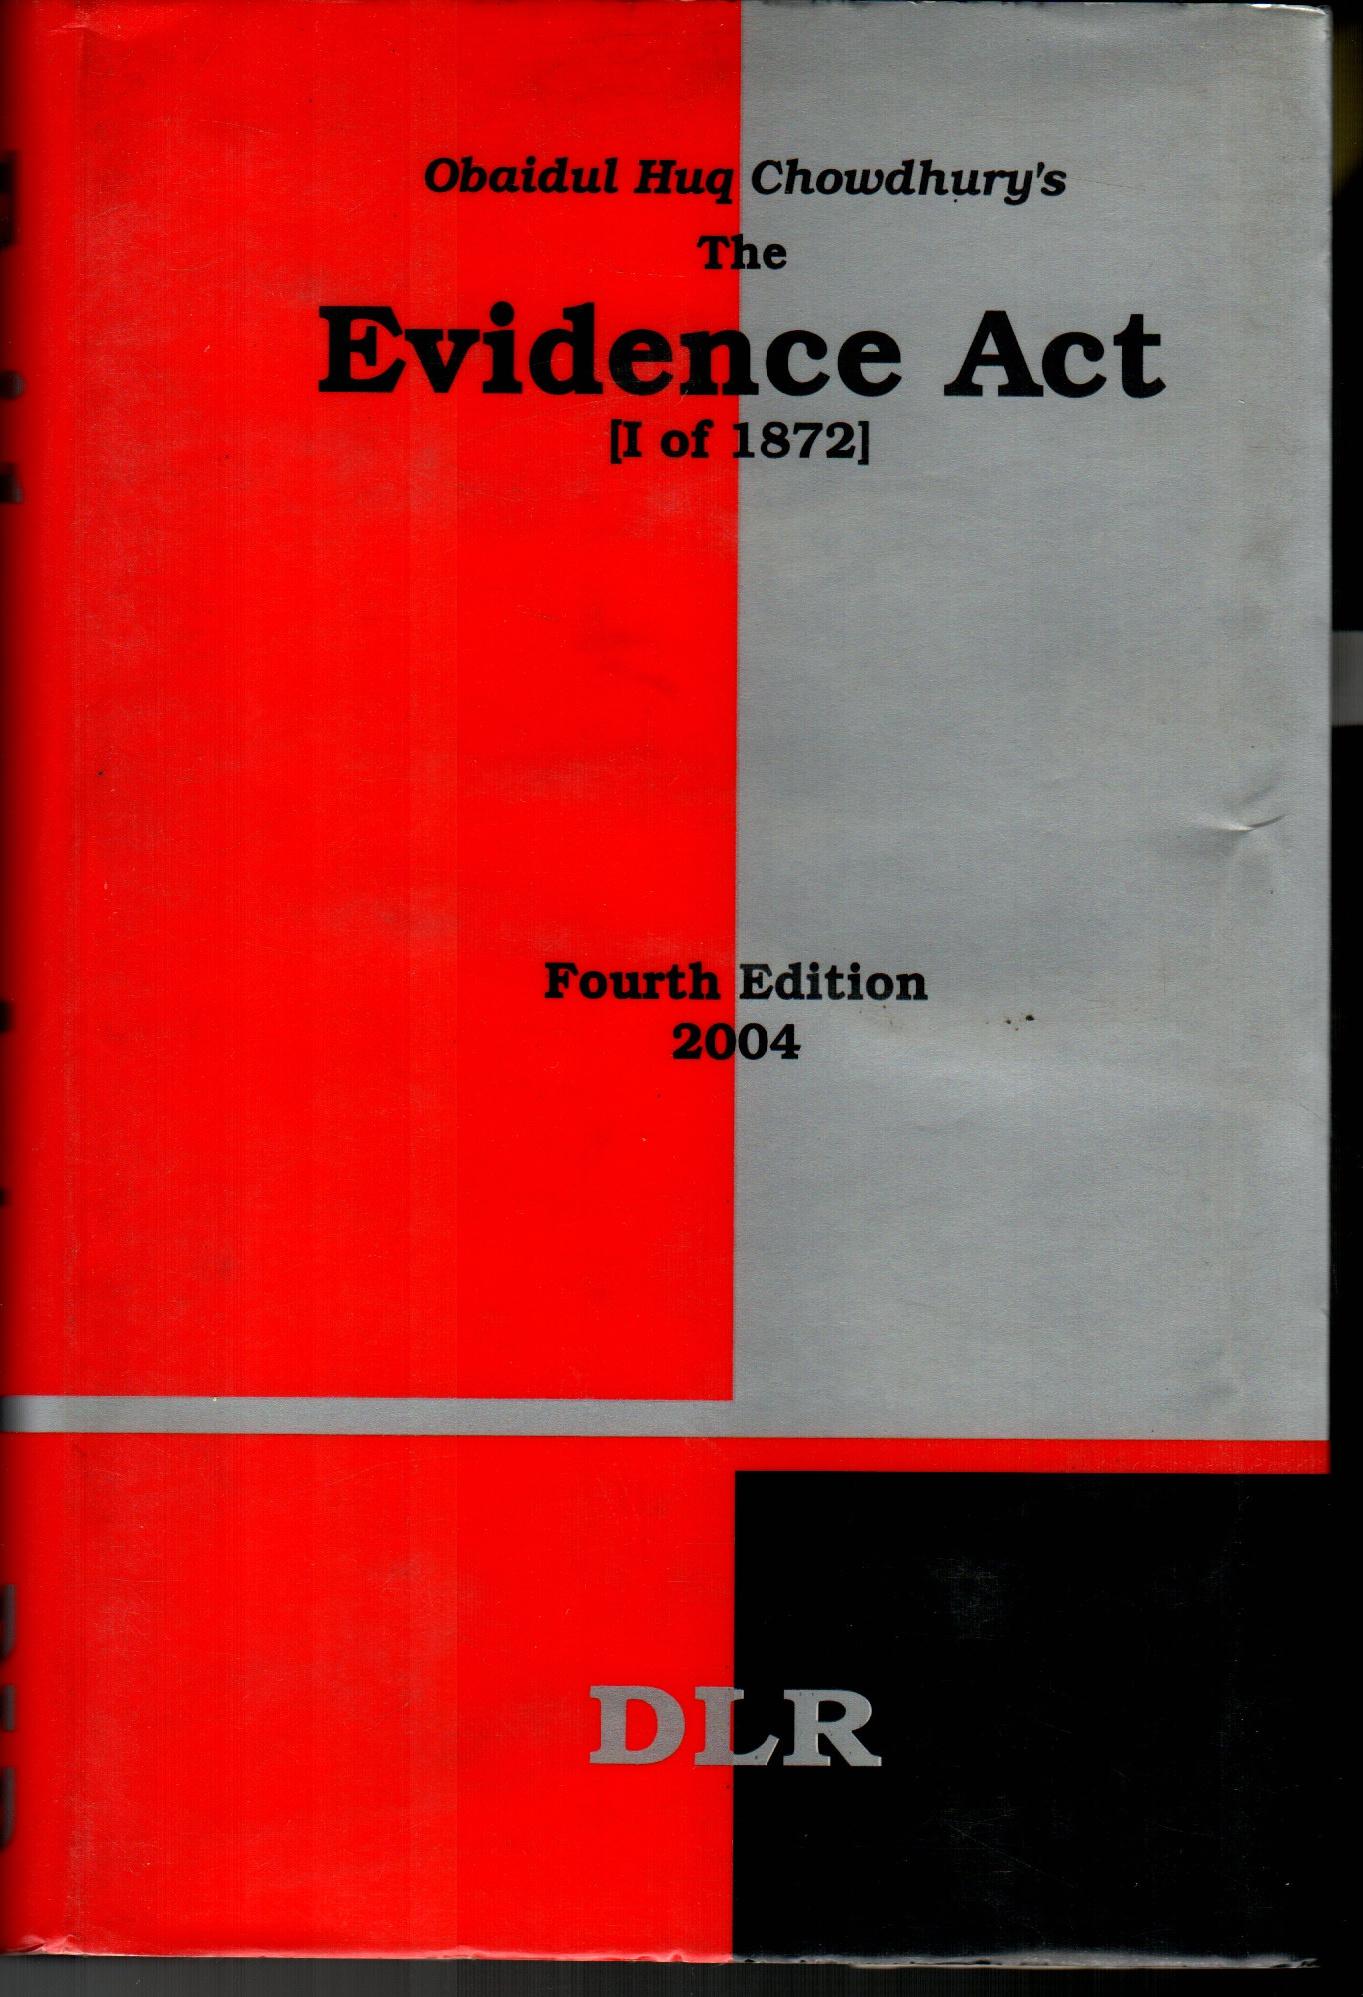 Evidence Act, DLR